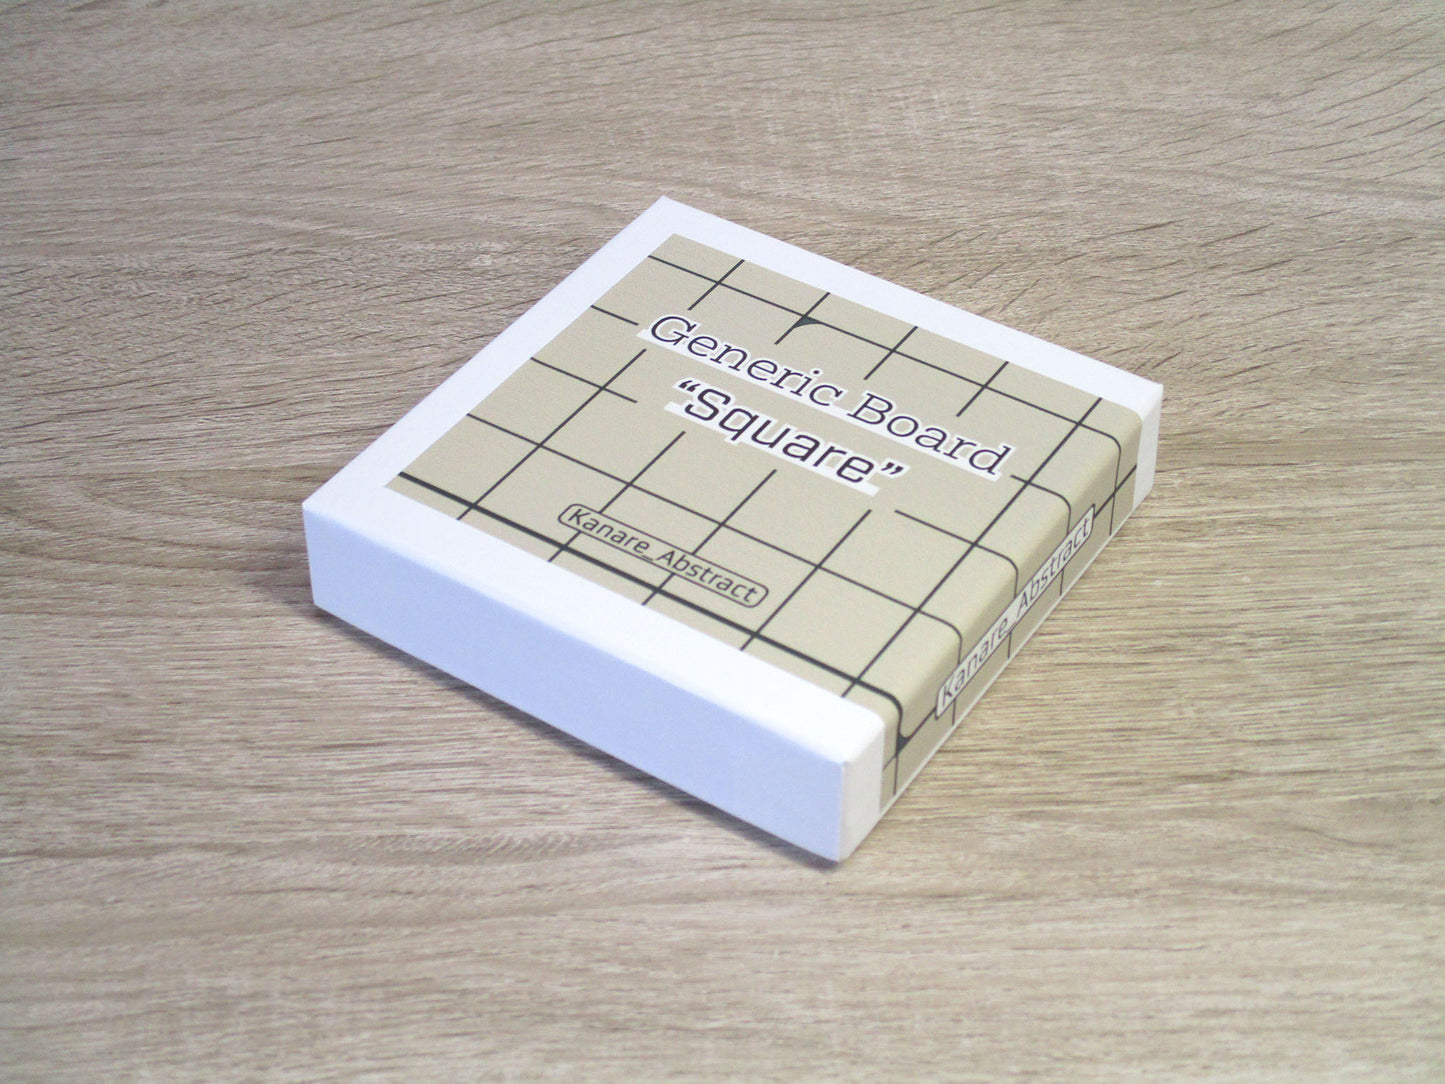 Generic Board "Square" Set